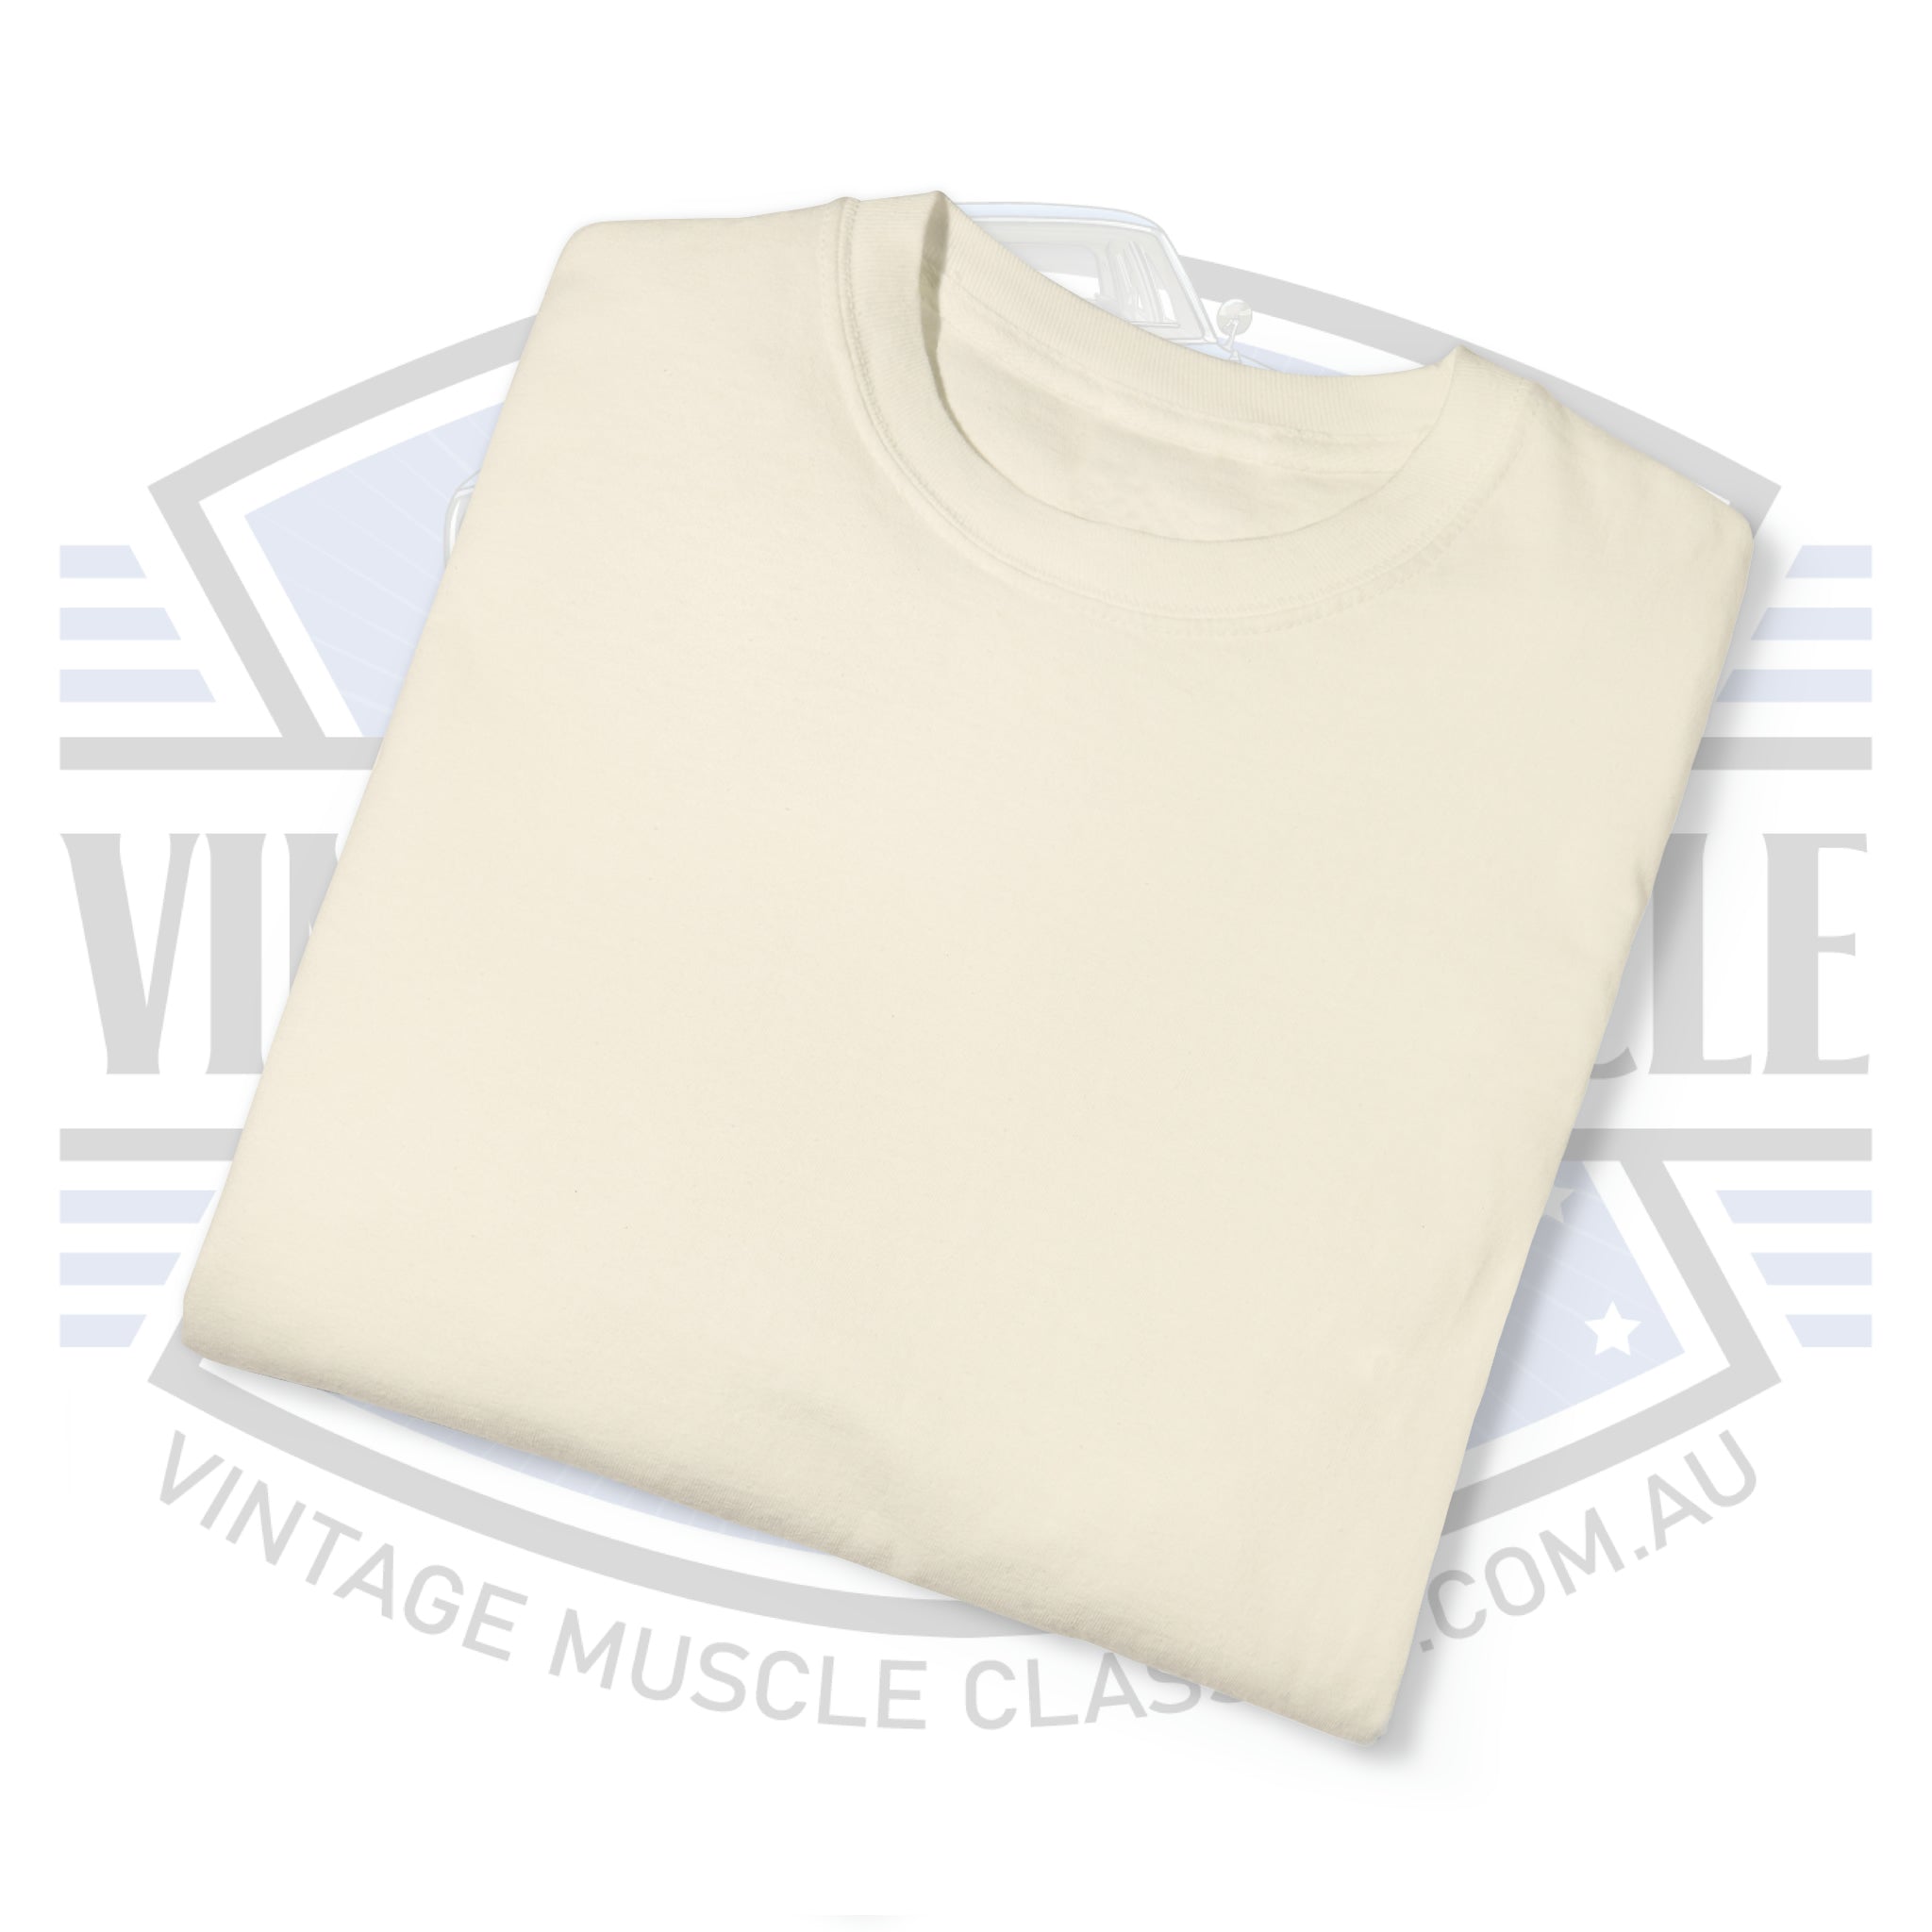 Fairlane ZA - Unisex Garment-Dyed T-shirt